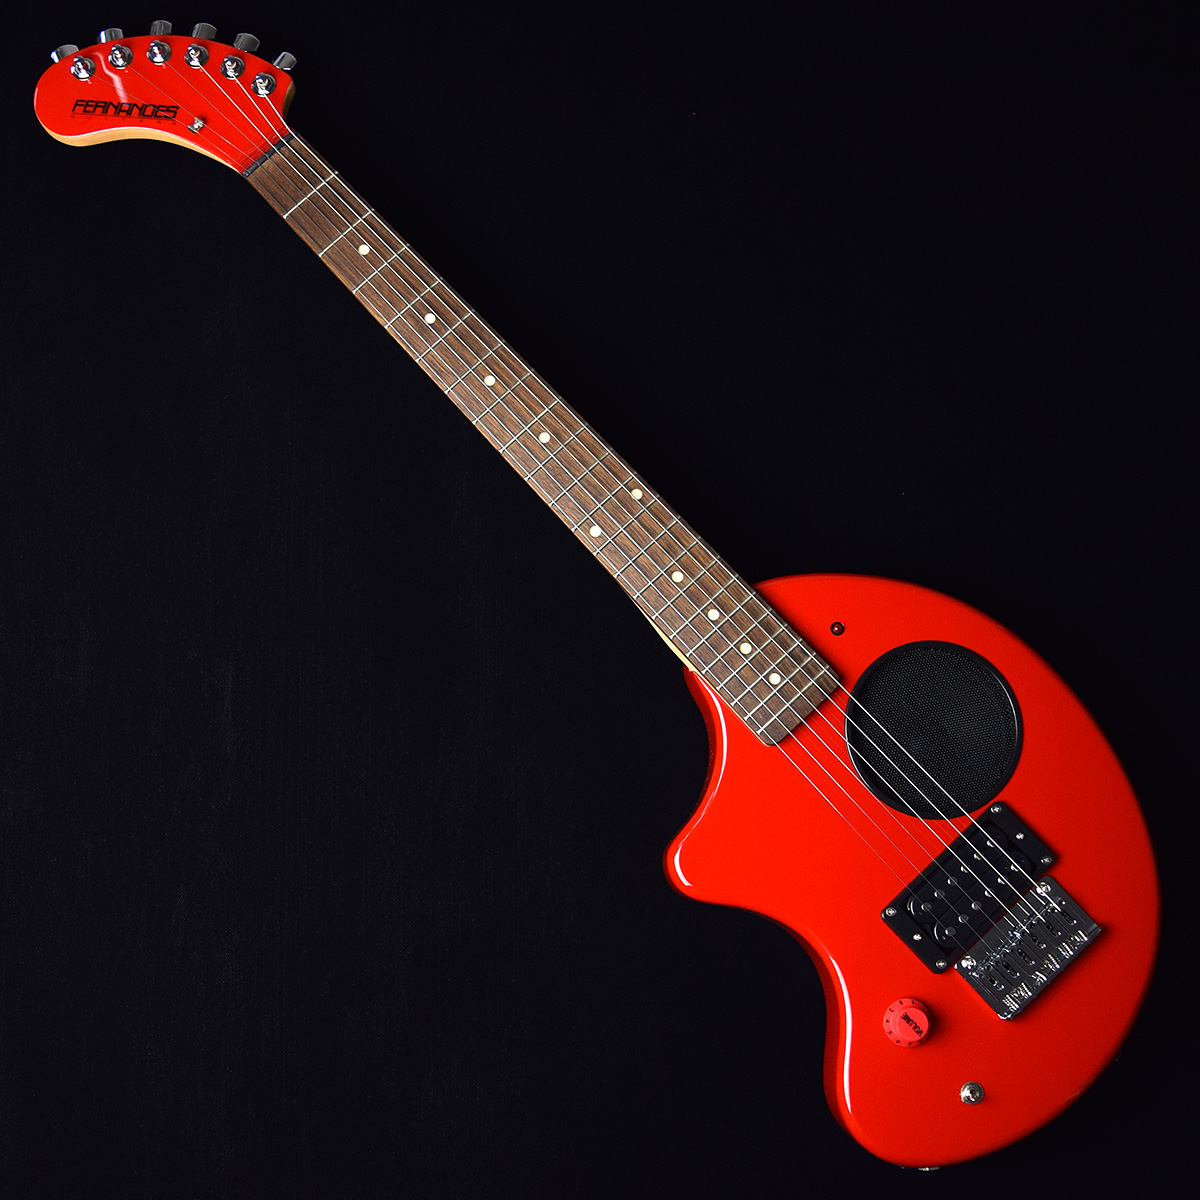 FERNANDES ZO-3 RED LH 左利きモデル スピーカー内蔵ミニエレキギター